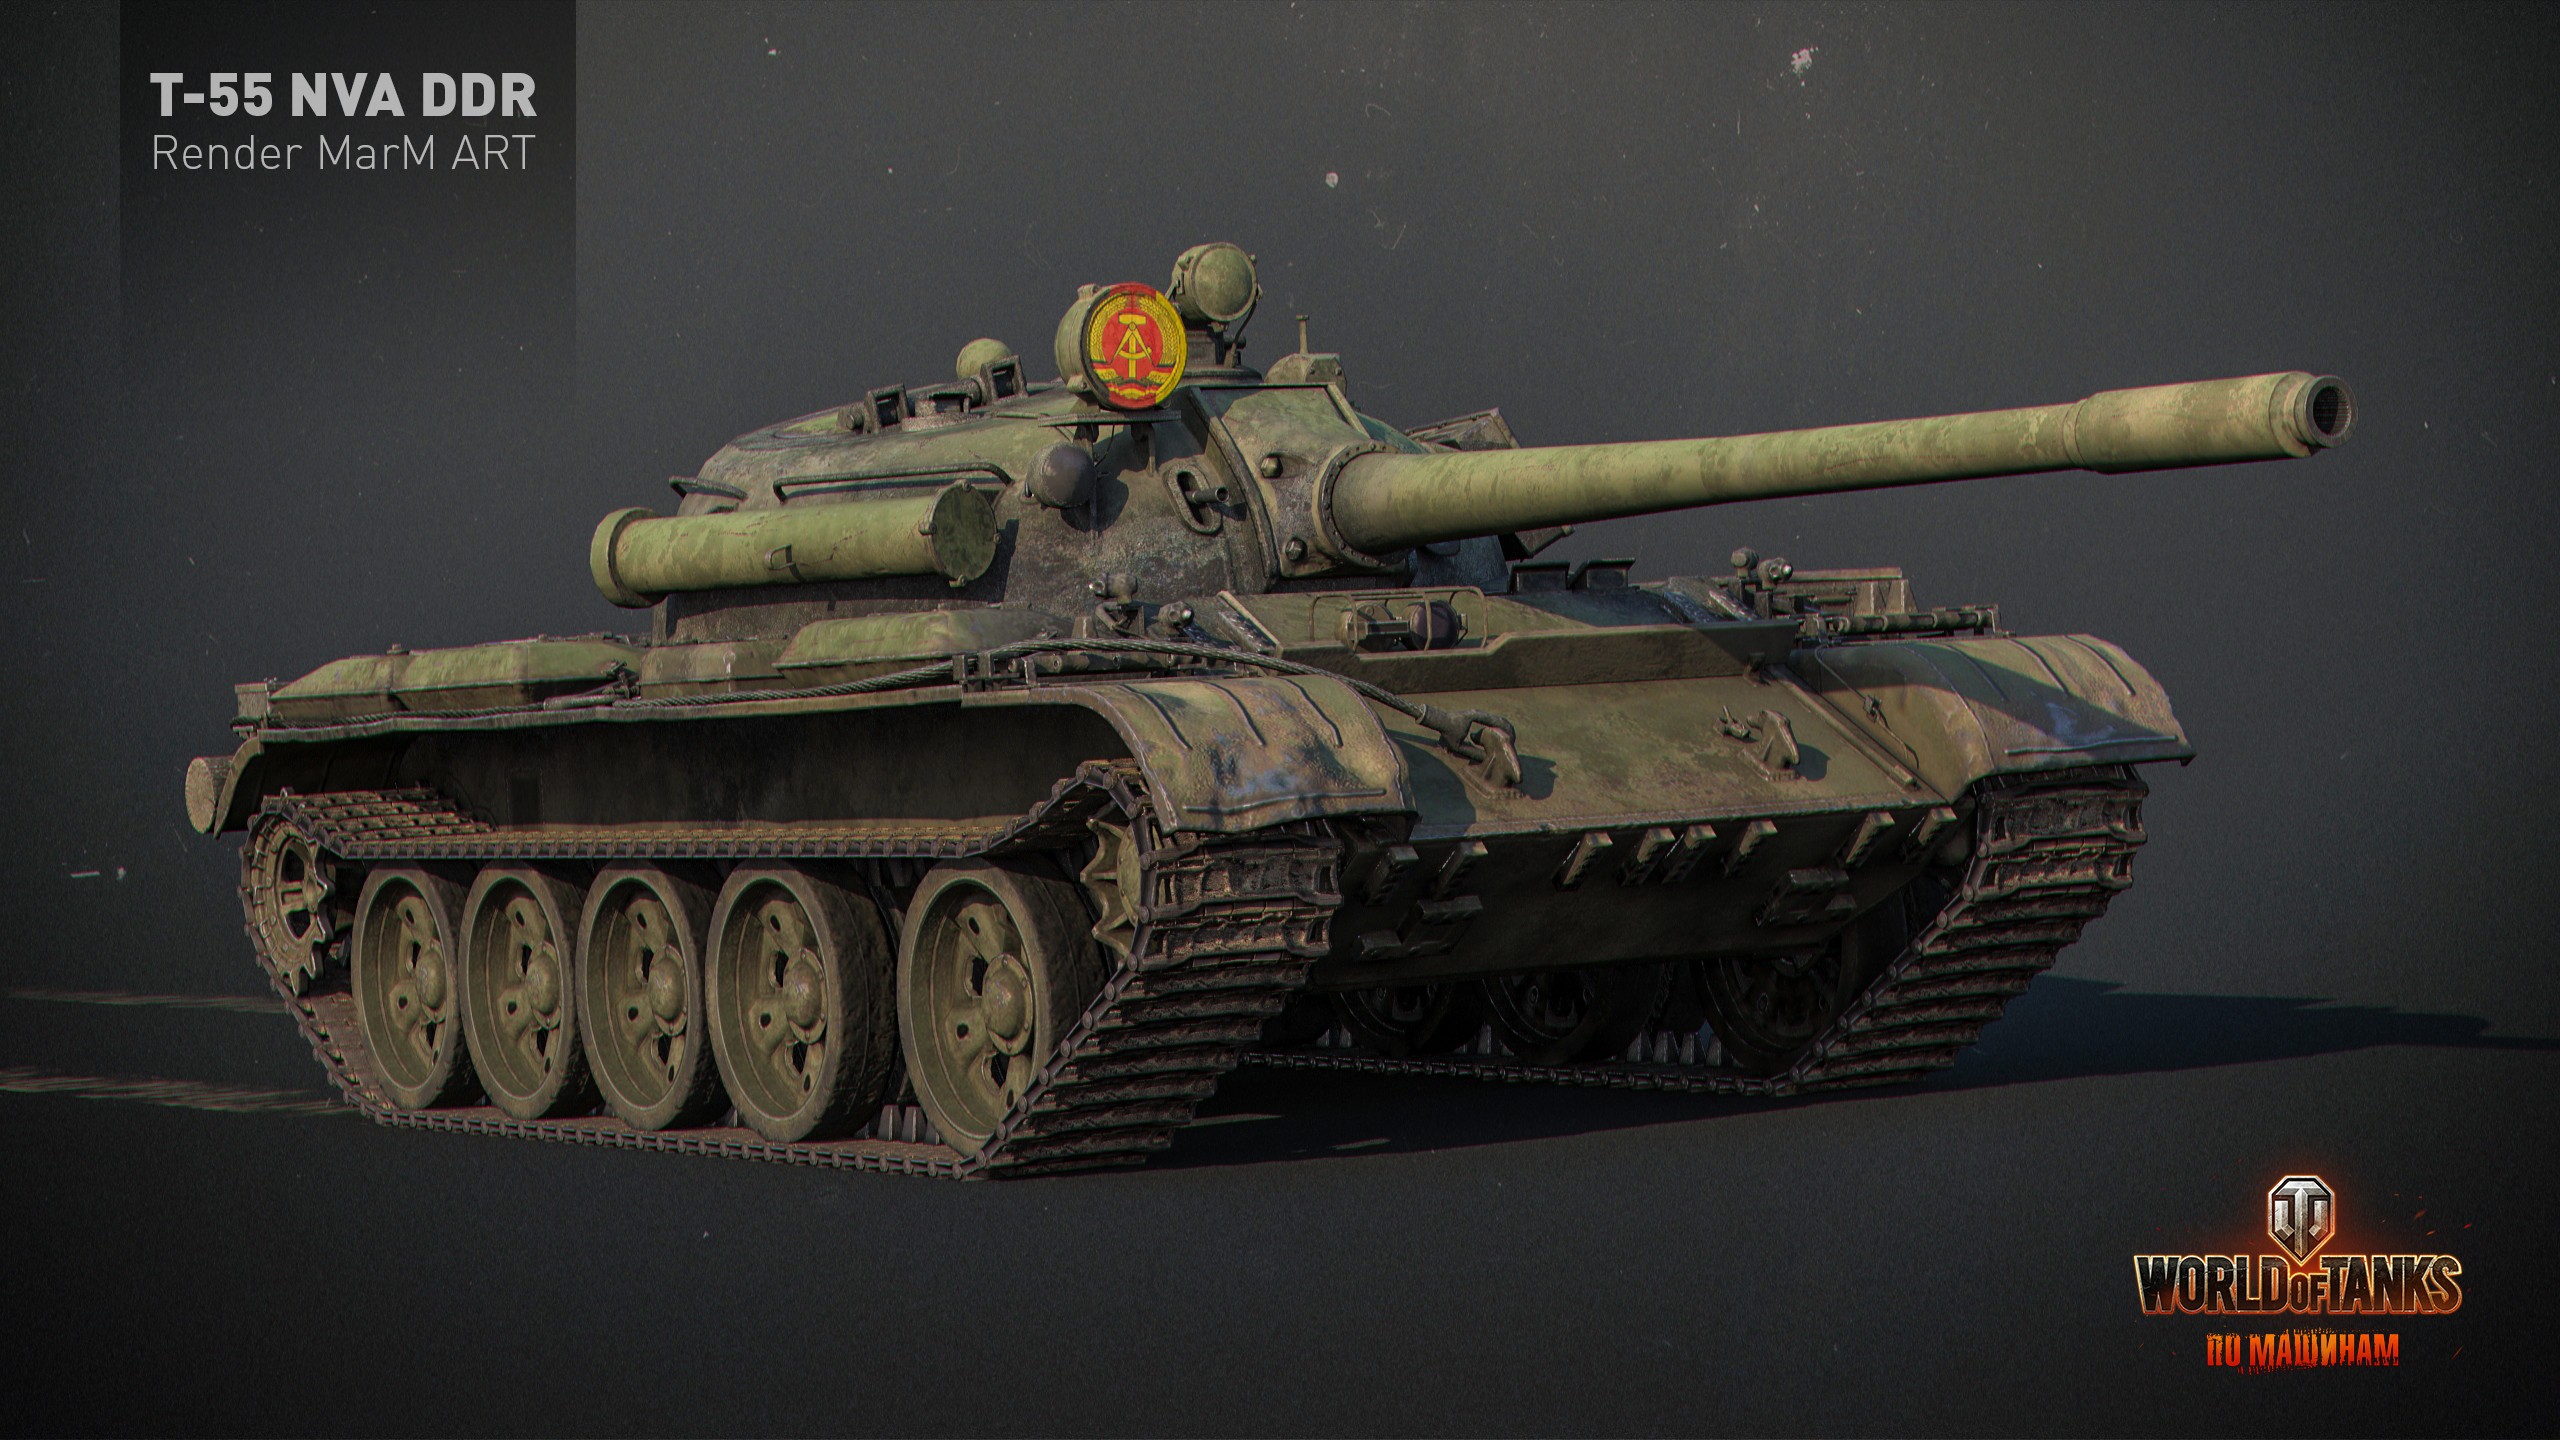 General 2560x1440 World of Tanks tank wargaming CGI video games T-55